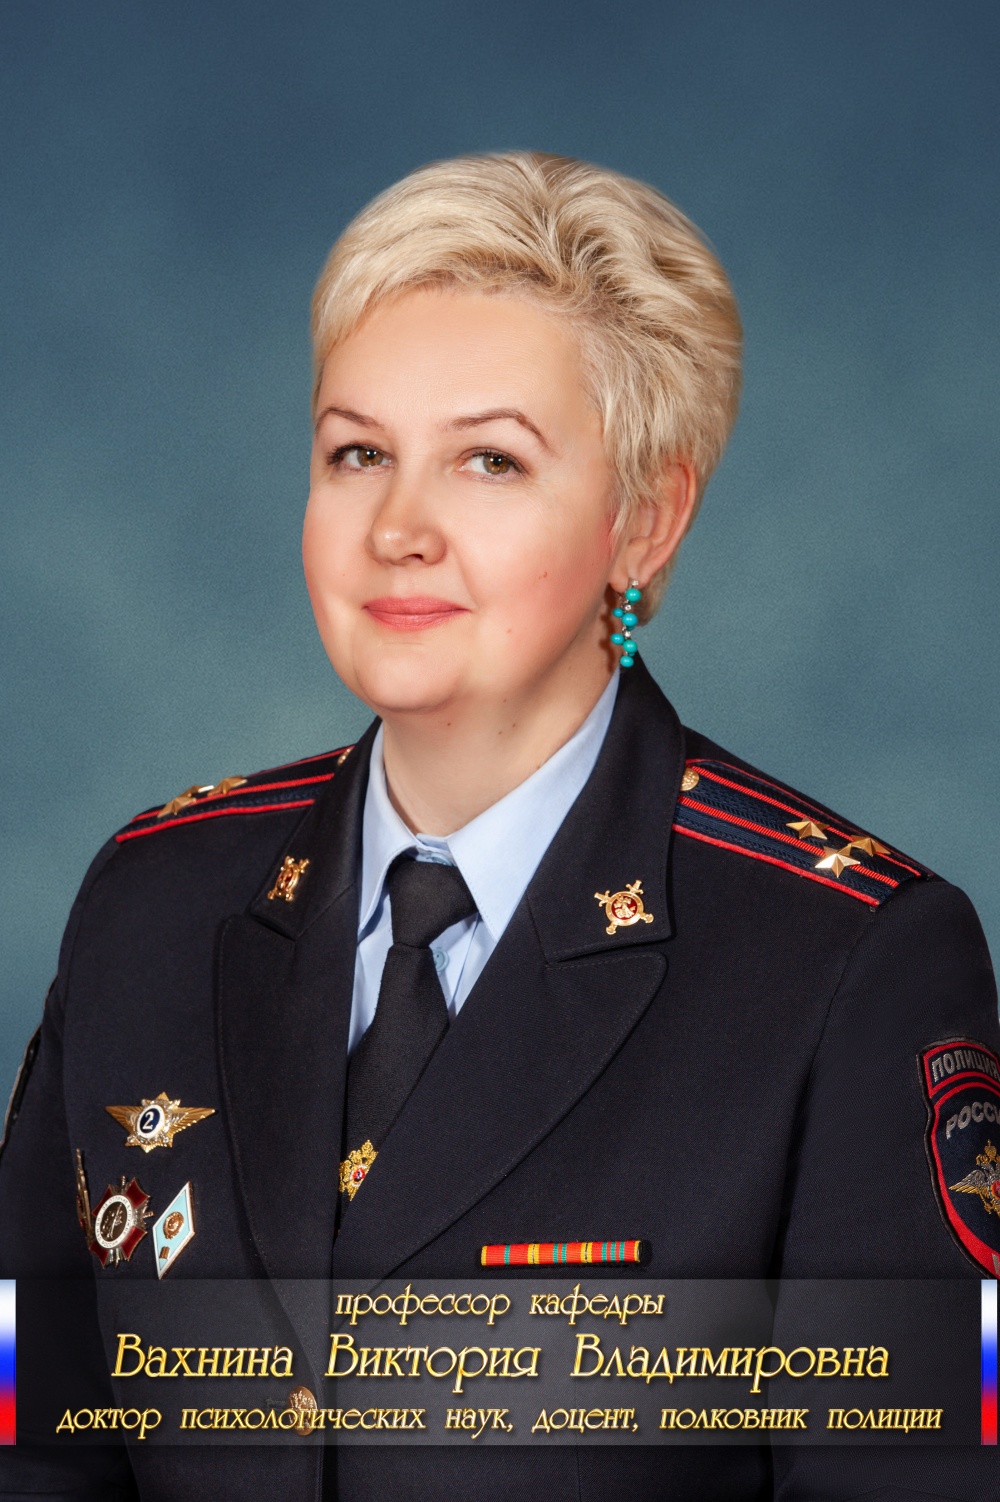                         Vahnina Viktoriya
            